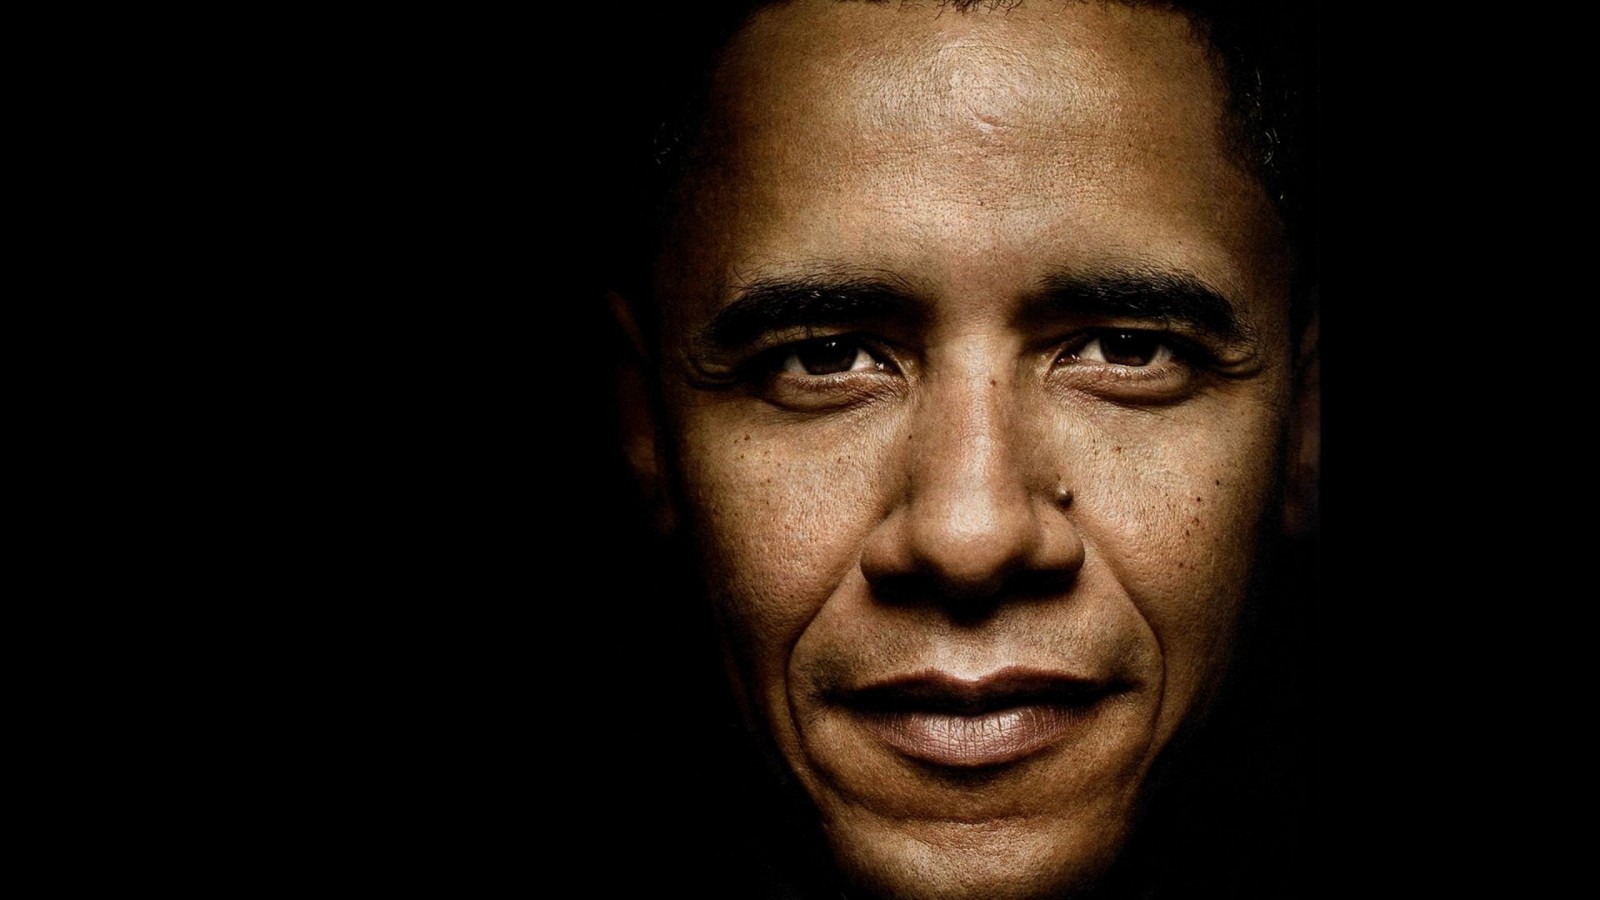 President Barack Obama Portrait Wallpaper for Desktop 1600x900